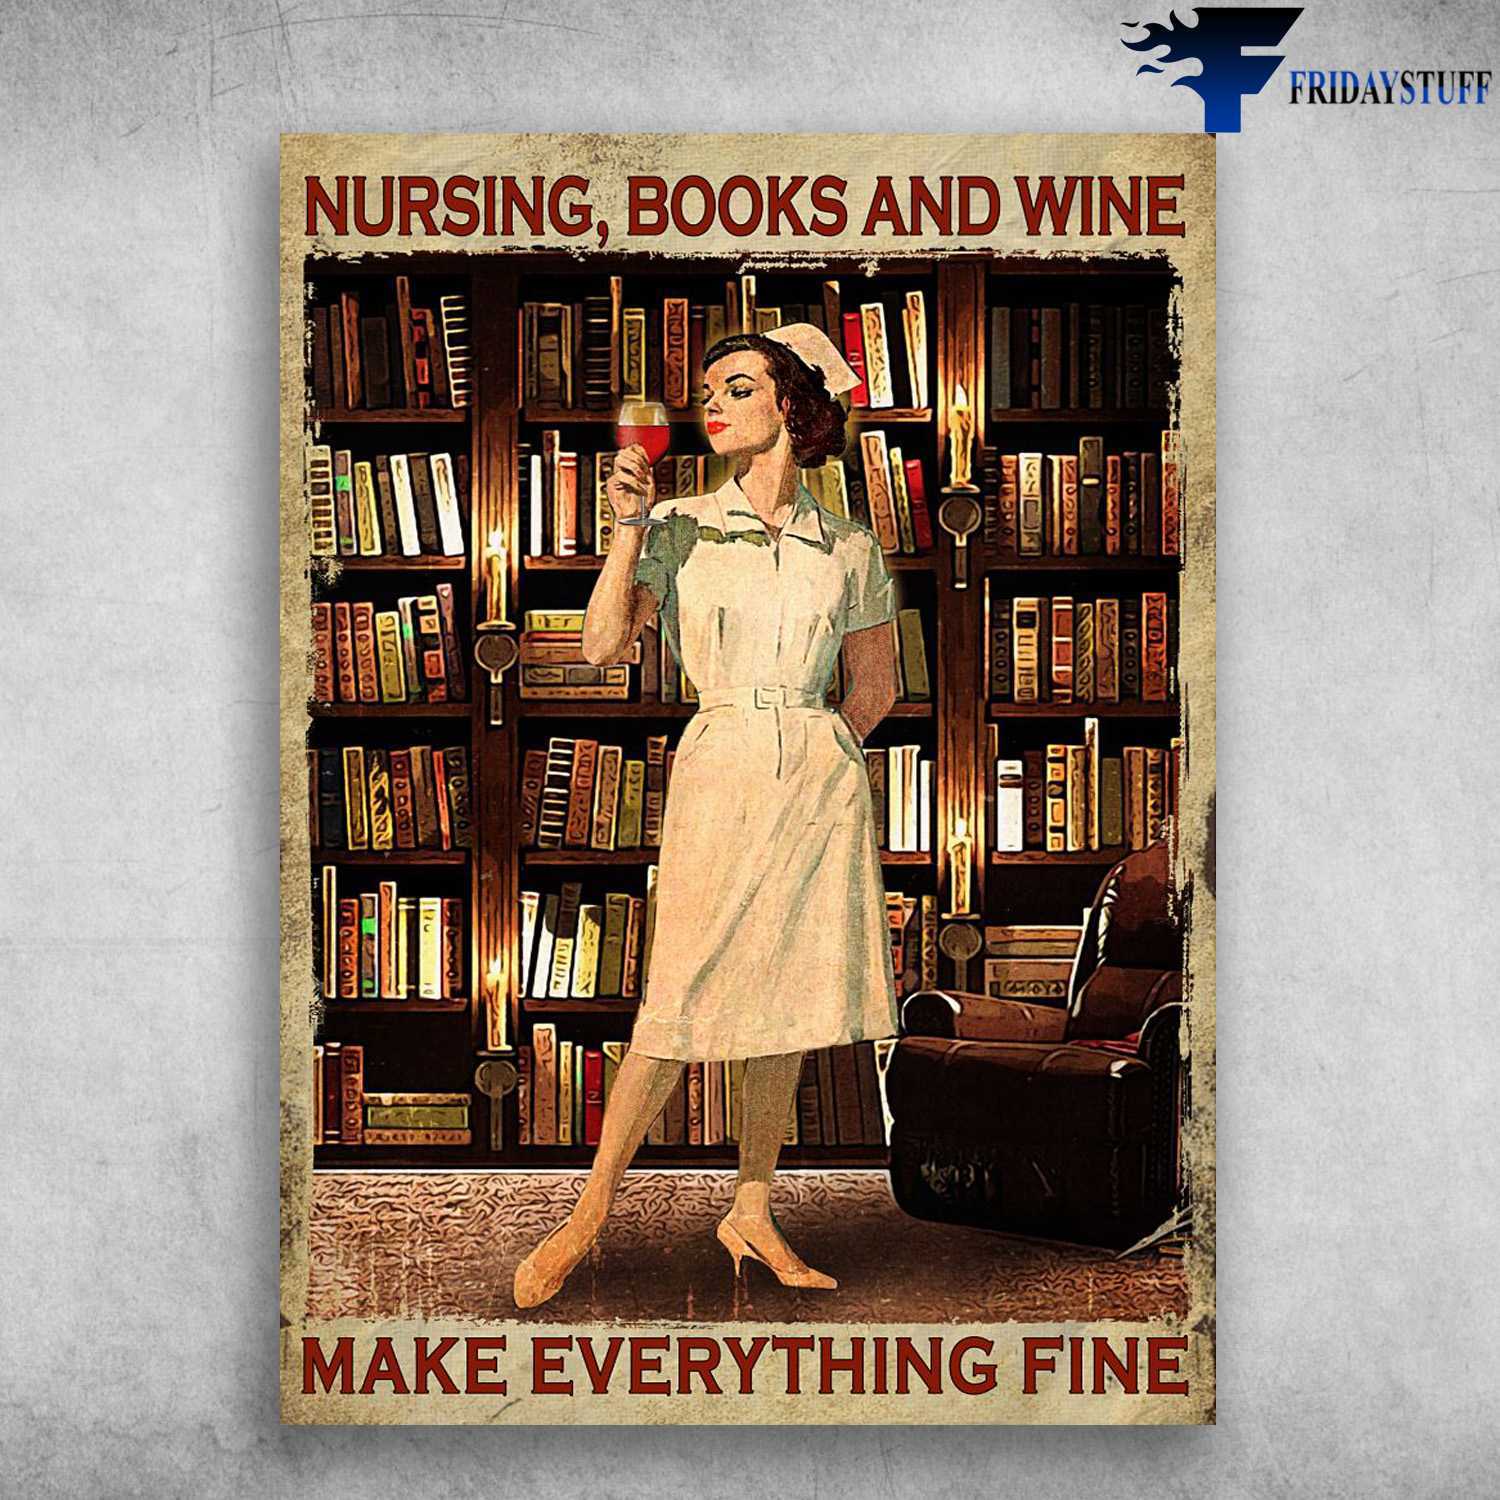 Nurse Drink Wine, Book And Wine - Nursing, Books And Wine, Make Everything Fine, Reading Book